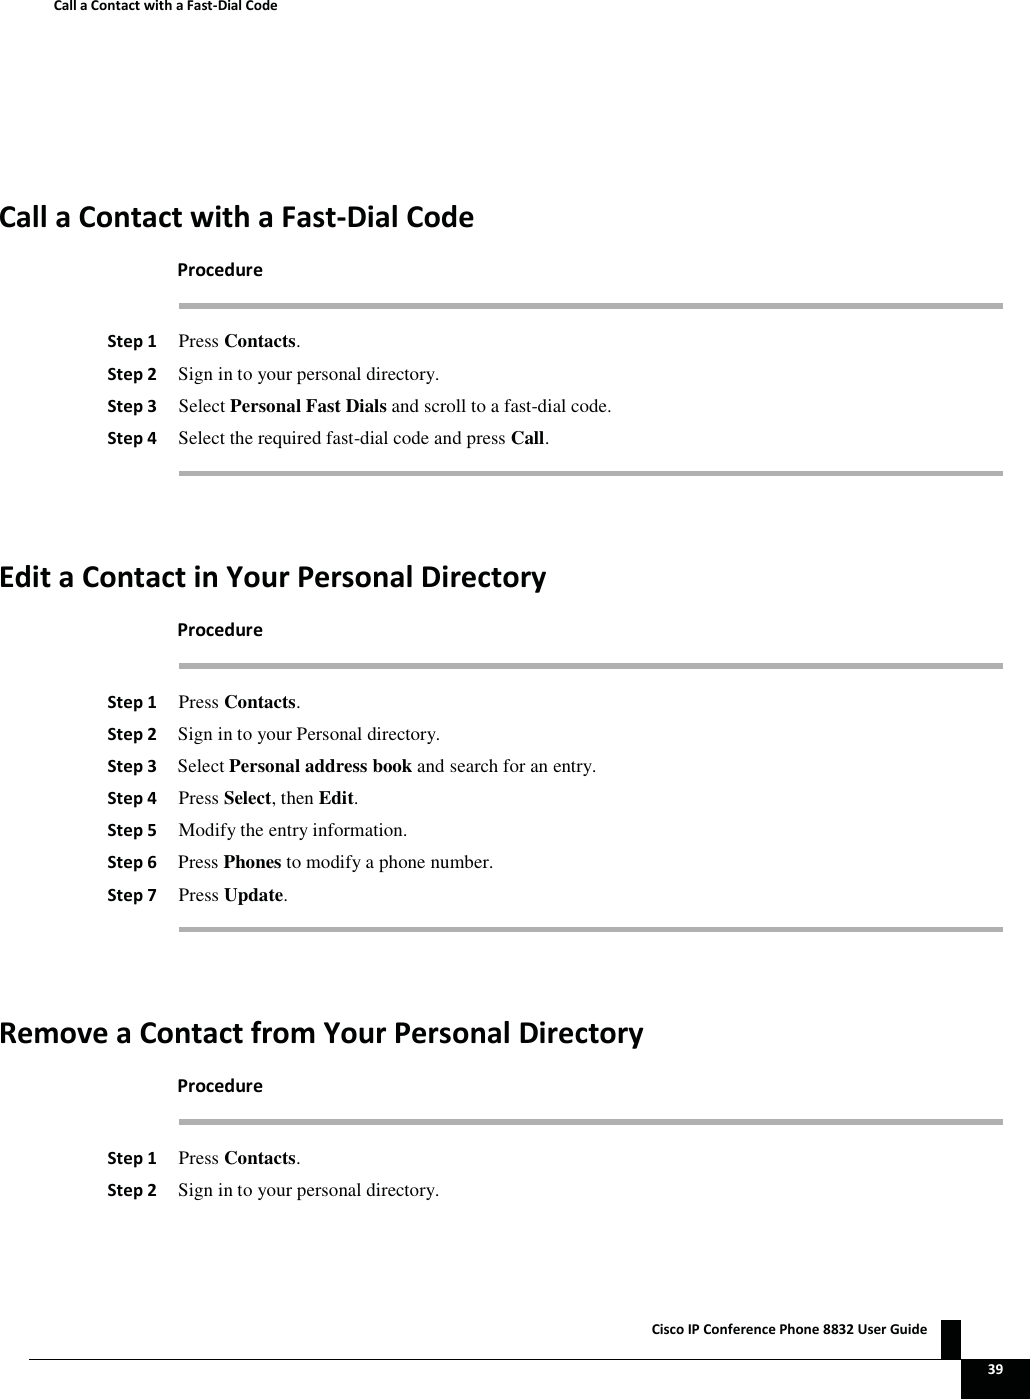  ŝƐĐŽ/WŽŶĨĞƌĞŶĐĞWŚŽŶĞϴϴϯϮhƐĞƌ&apos;ƵŝĚĞ   ϯϵ ĂůůĂŽŶƚĂĐƚǁŝƚŚĂ&amp;ĂƐƚͲŝĂůŽĚĞ ĂůůĂŽŶƚĂĐƚǁŝƚŚĂ&amp;ĂƐƚͲŝĂůŽĚĞWƌŽĐĞĚƵƌĞ ^ƚĞƉϭ Press Contacts. ^ƚĞƉϮ Sign in to your personal directory. ^ƚĞƉϯ Select Personal Fast Dials and scroll to a fast-dial code. ^ƚĞƉϰ Select the required fast-dial code and press Call.  ĚŝƚĂŽŶƚĂĐƚŝŶzŽƵƌWĞƌƐŽŶĂůŝƌĞĐƚŽƌǇWƌŽĐĞĚƵƌĞ ^ƚĞƉϭ Press Contacts. ^ƚĞƉϮ Sign in to your Personal directory. ^ƚĞƉϯ Select Personal address book and search for an entry. ^ƚĞƉϰ Press Select, then Edit. ^ƚĞƉϱ Modify the entry information. ^ƚĞƉϲ Press Phones to modify a phone number. ^ƚĞƉϳ Press Update.  ZĞŵŽǀĞĂŽŶƚĂĐƚĨƌŽŵzŽƵƌWĞƌƐŽŶĂůŝƌĞĐƚŽƌǇWƌŽĐĞĚƵƌĞ ^ƚĞƉϭ Press Contacts. ^ƚĞƉϮ Sign in to your personal directory. 